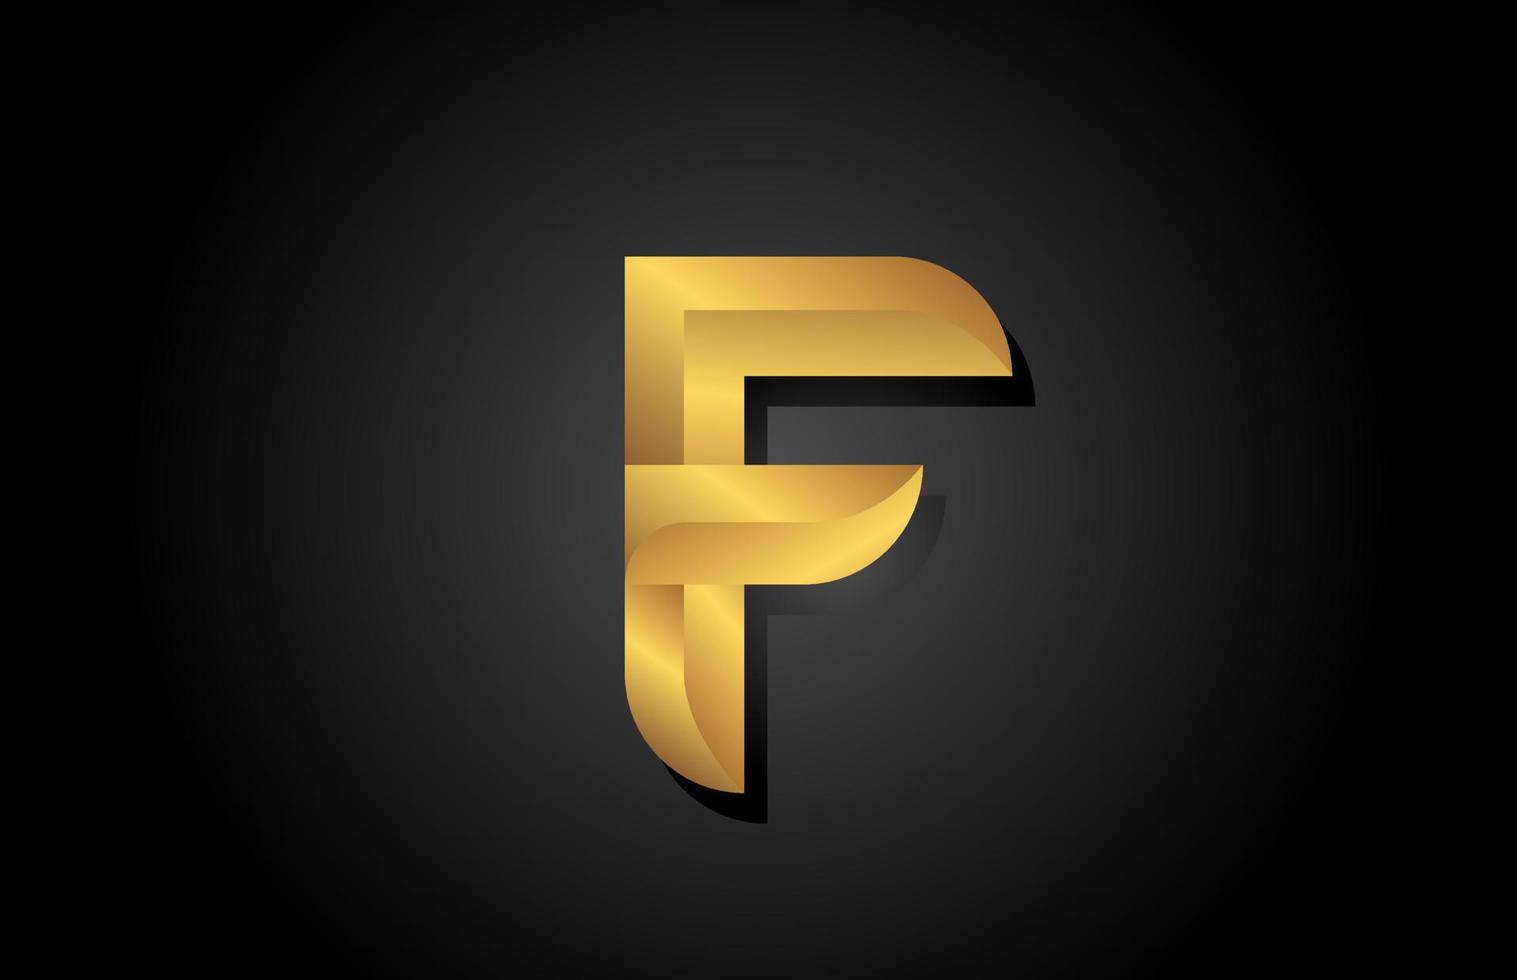 ouro dourado f design de ícone do logotipo da letra do alfabeto. modelo de empresa para negócios de luxo vetor